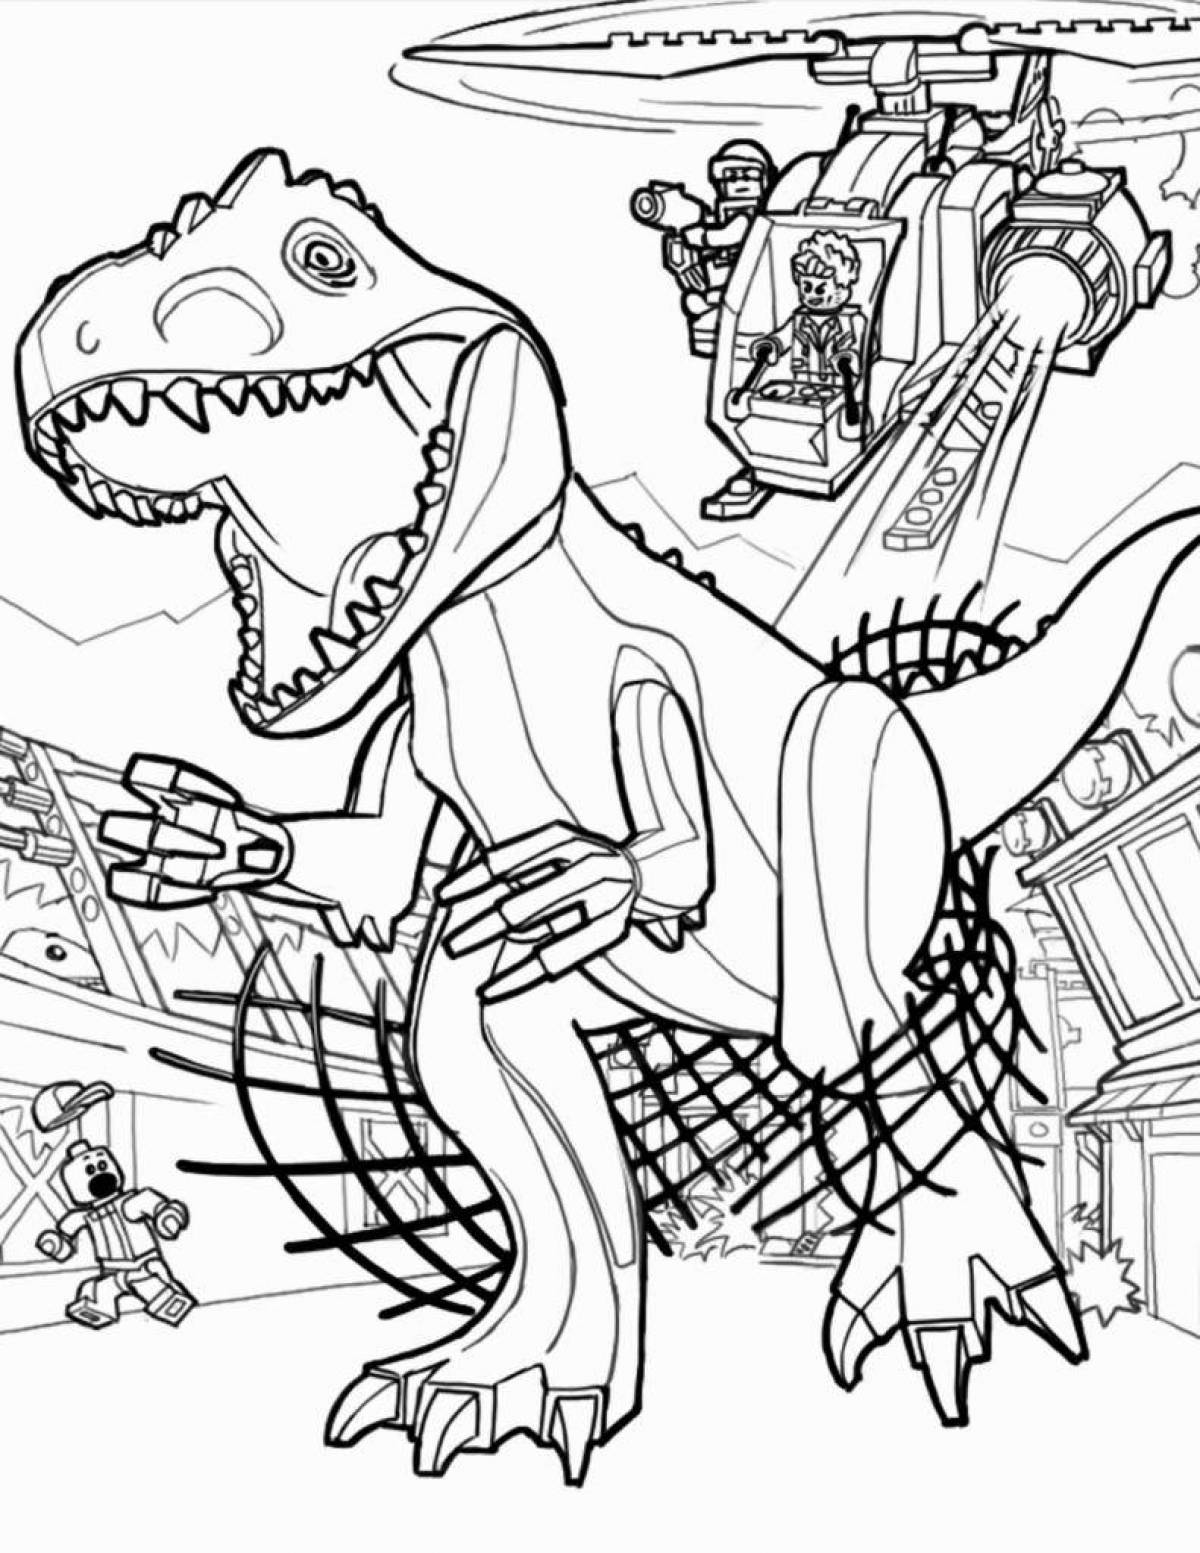 Amazing Jurassic World coloring book